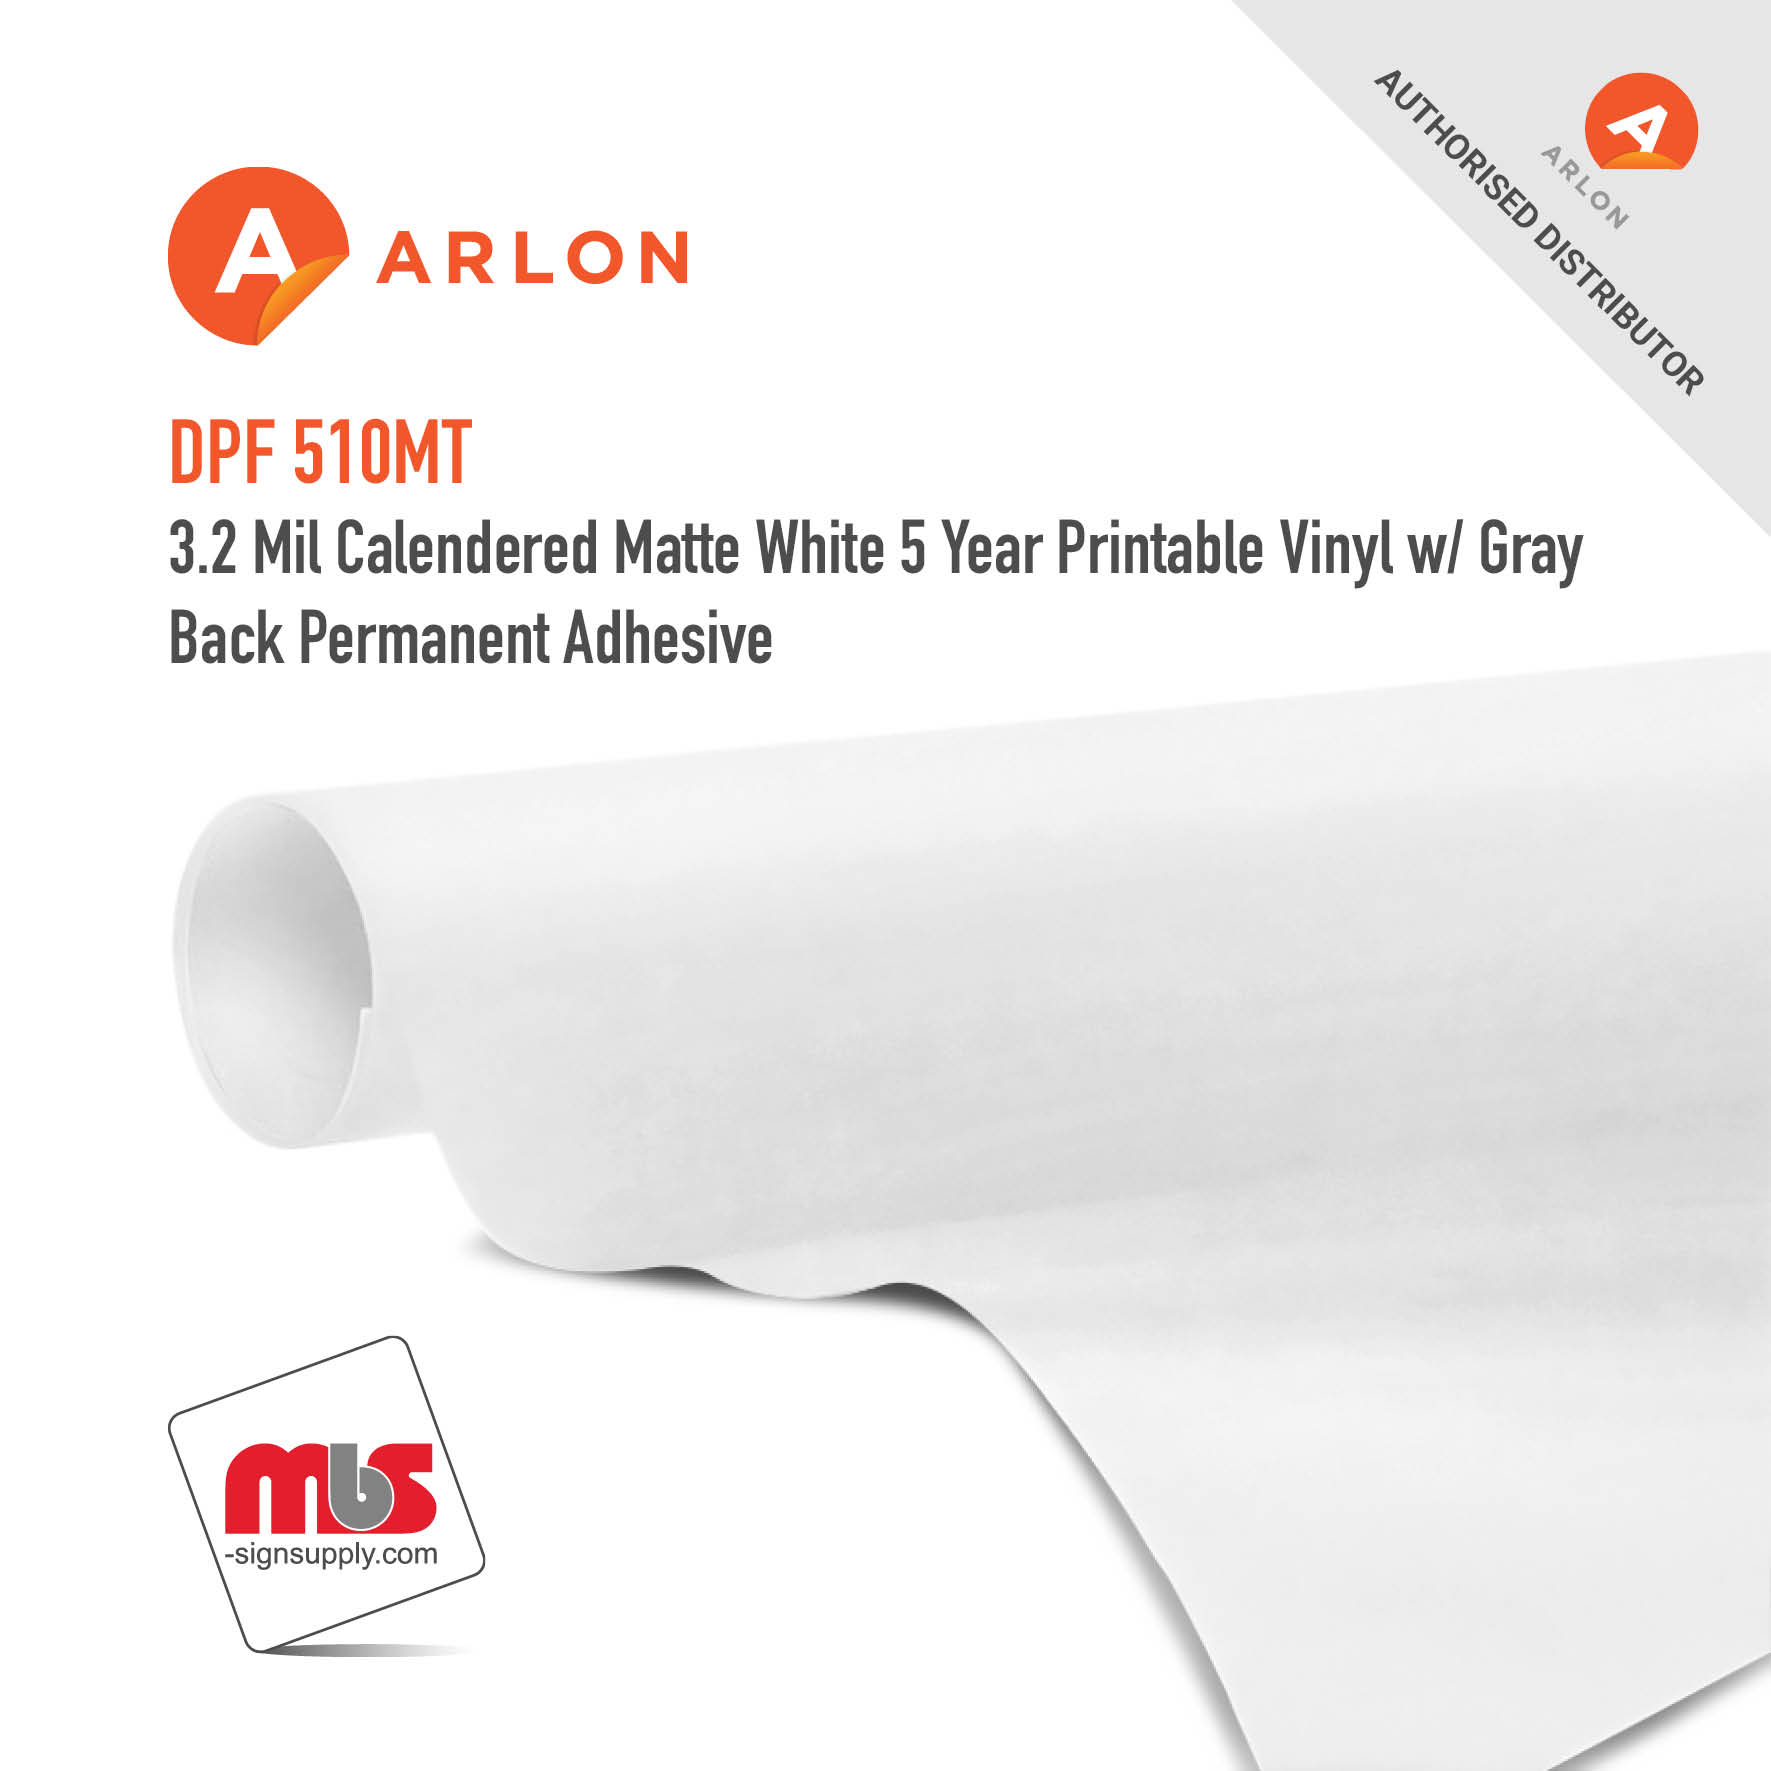 60'' x 50 Yard Roll - Arlon DPF 510MT 3.2 Mil Calendered Matte White 5 Year Printable Vinyl w/ Gray Back Permanent Adhesive